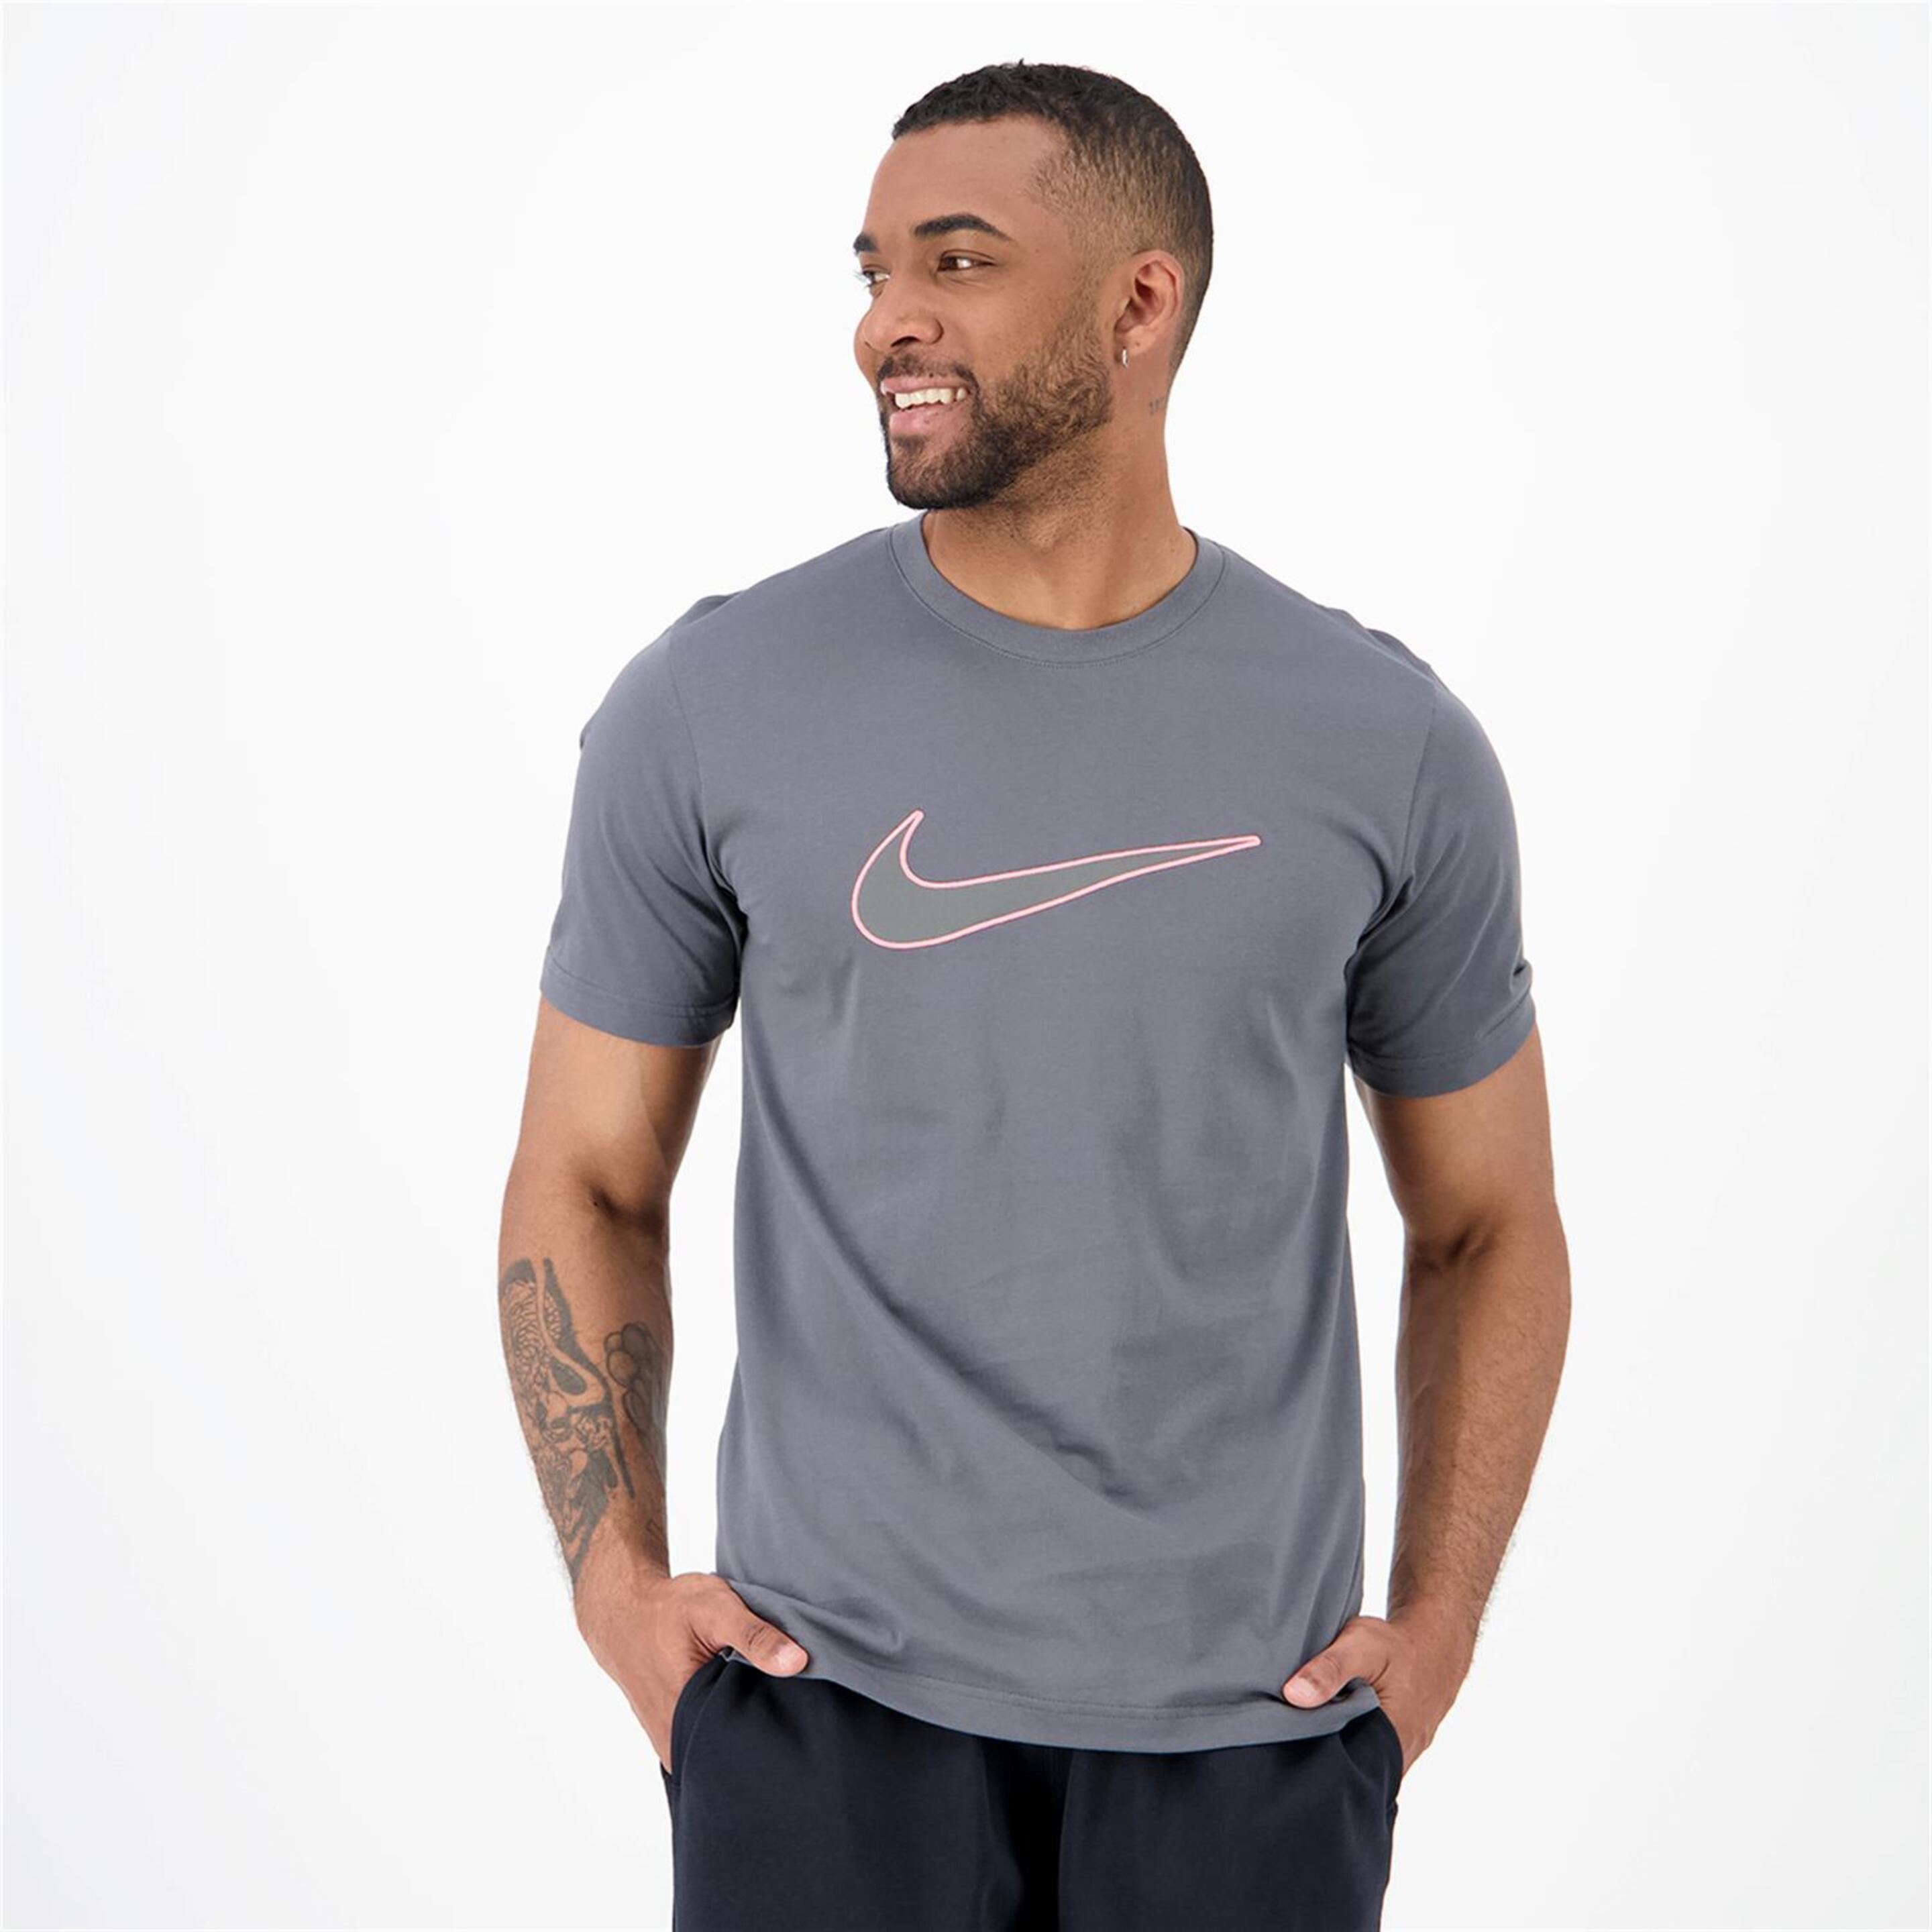 Camiseta Nike - gris - Camiseta Hombre